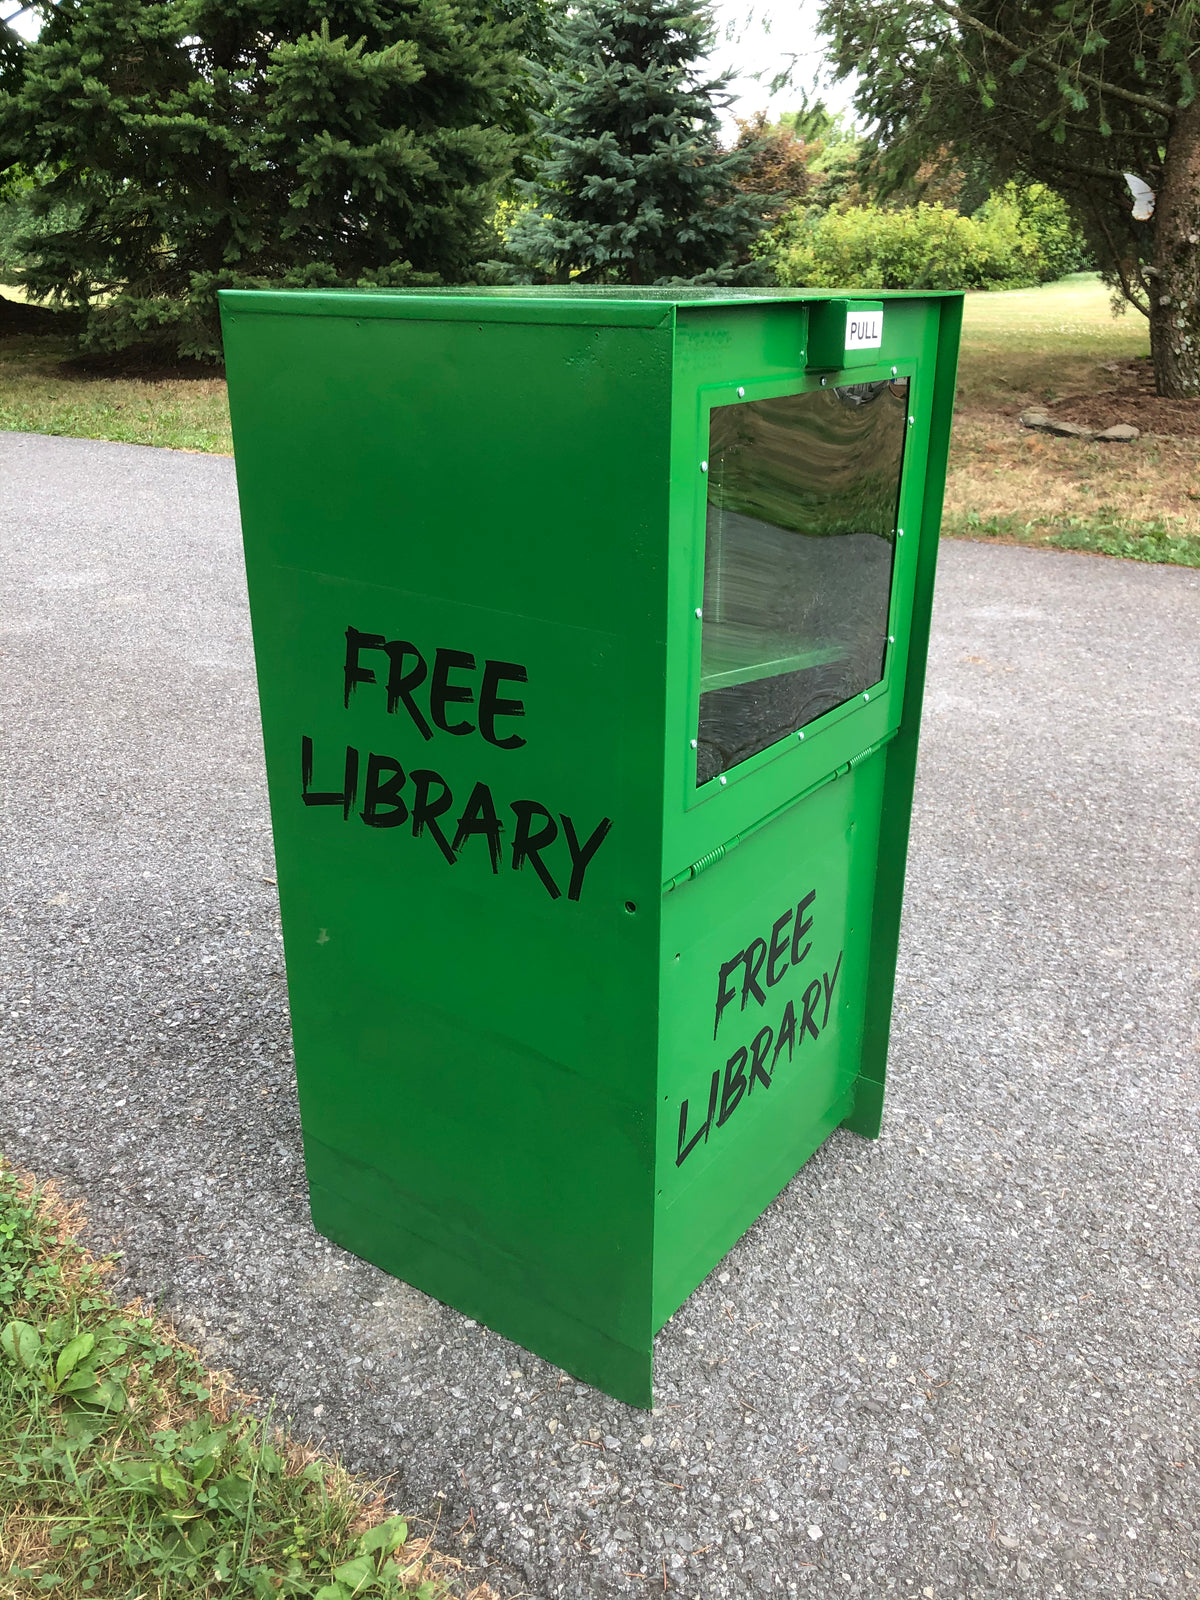 A-Sidewalk Library -Free Personalization